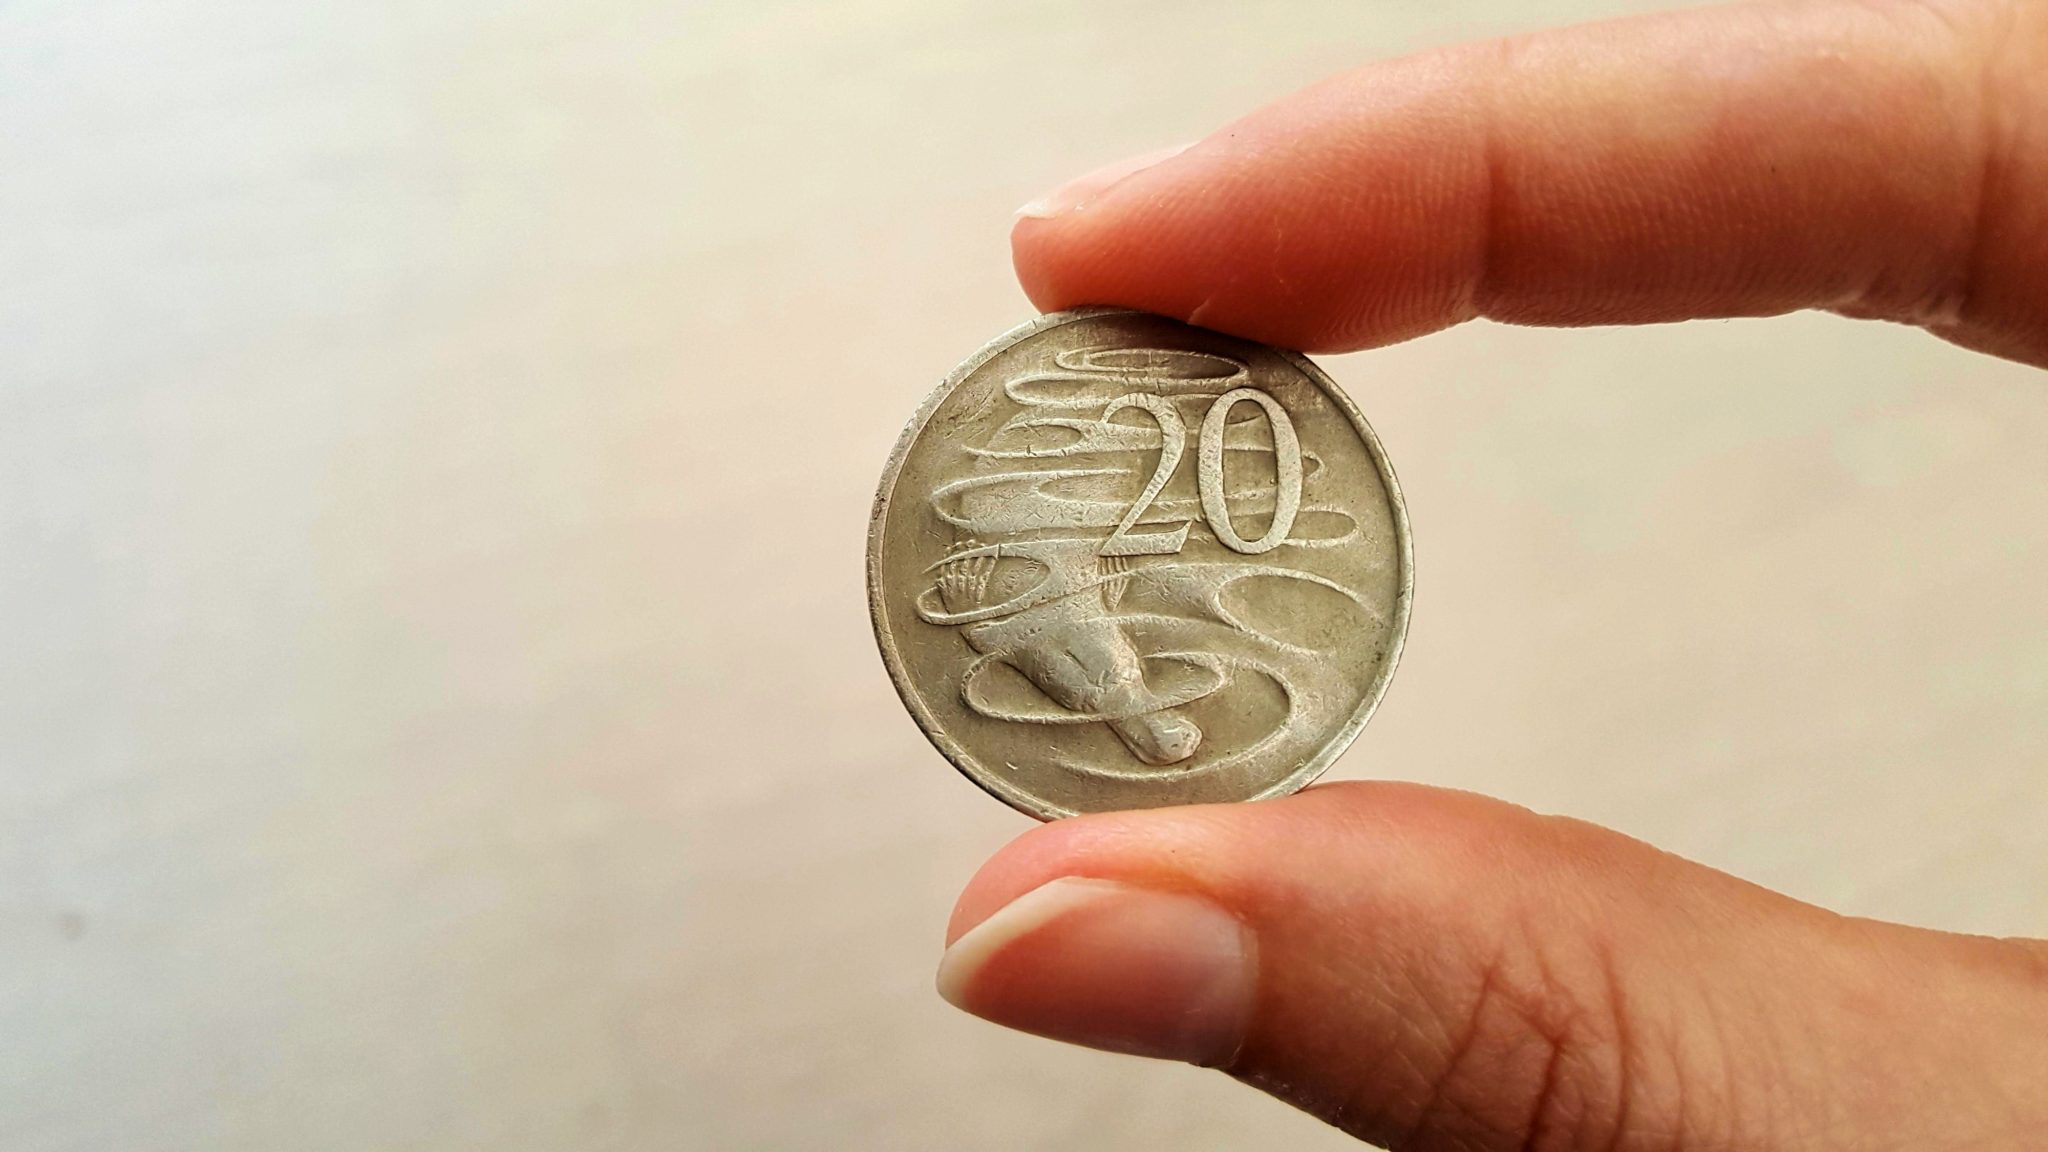 Platypus on the Australian 20 cent coin.